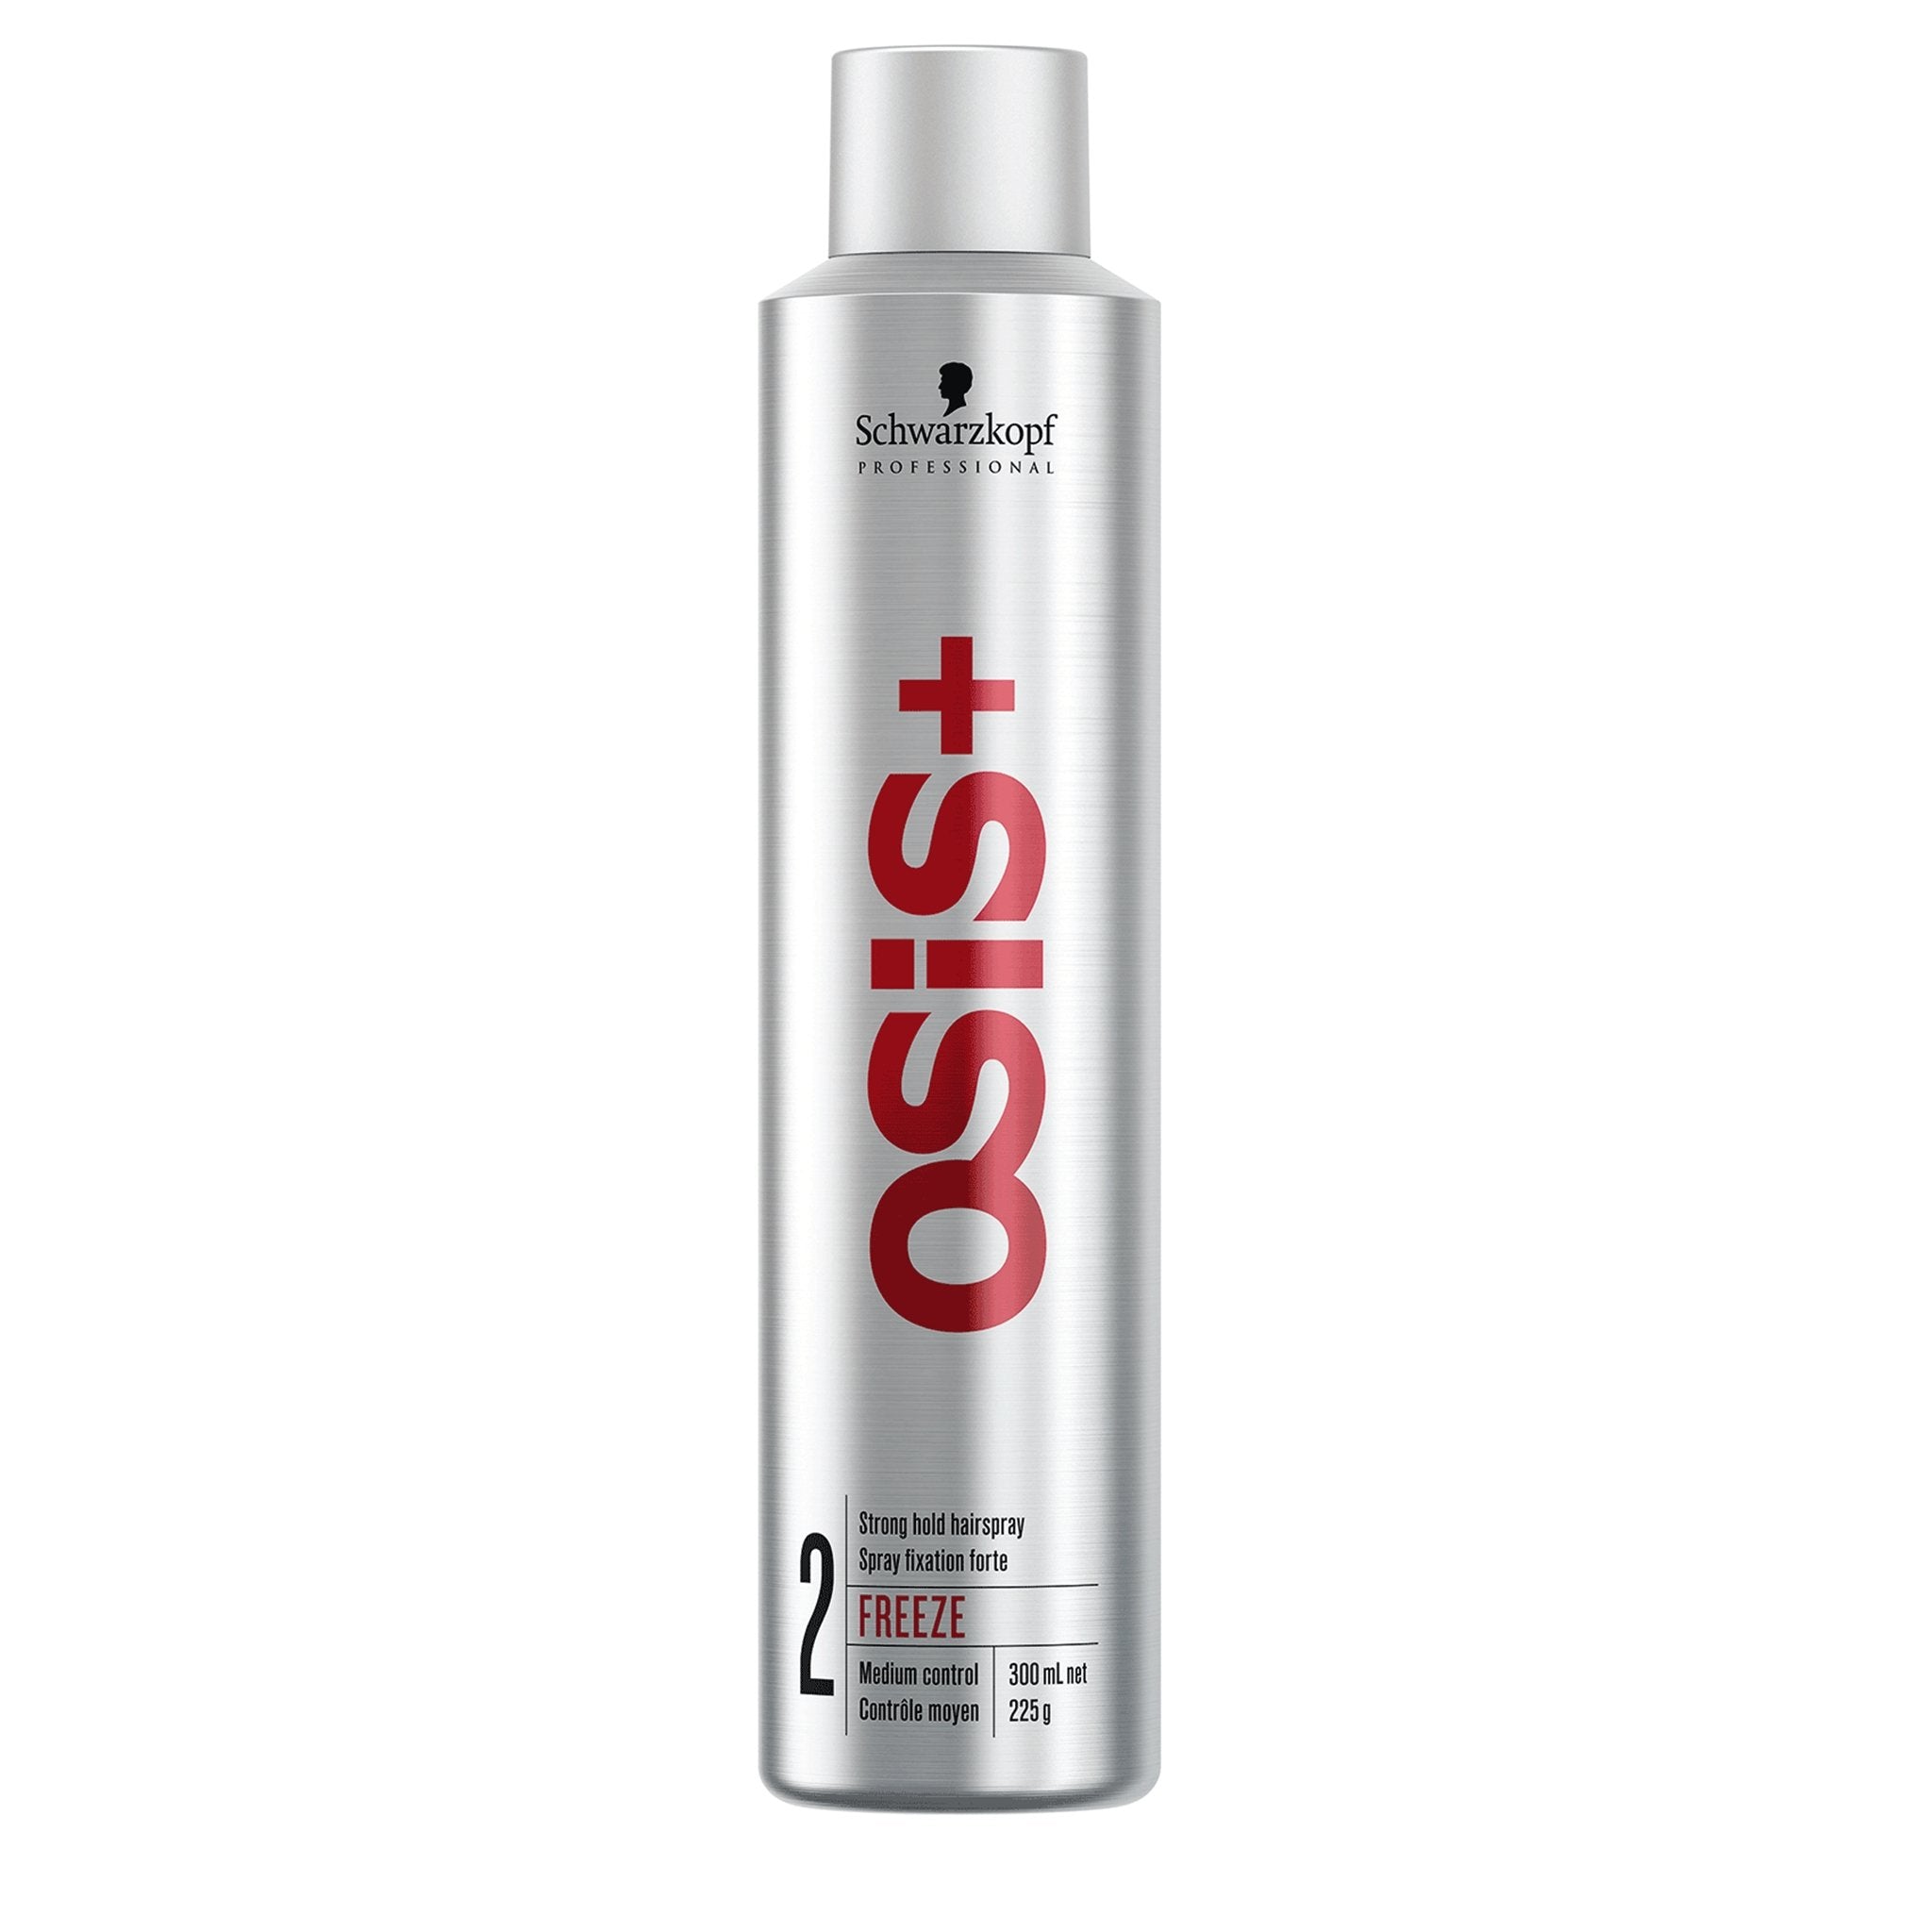 Schwarzkopf. Osis+ Spray Fixation Extra Forte Freeze Finish Tenue 2 - 300 ml - Concept C. Shop